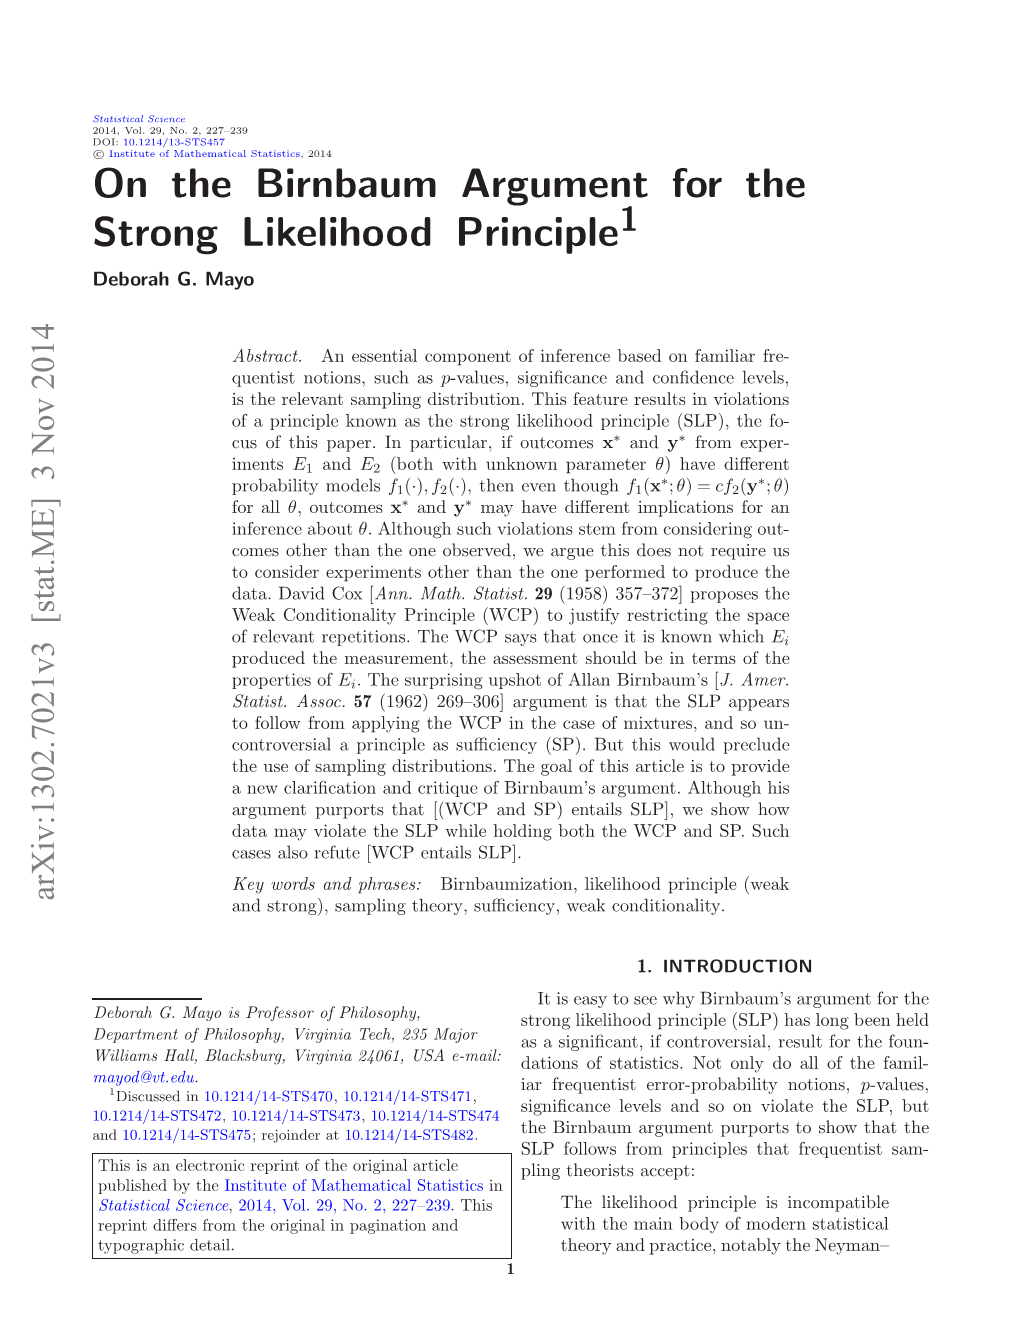 On the Birnbaum Argument for the Strong Likelihood Principle 3